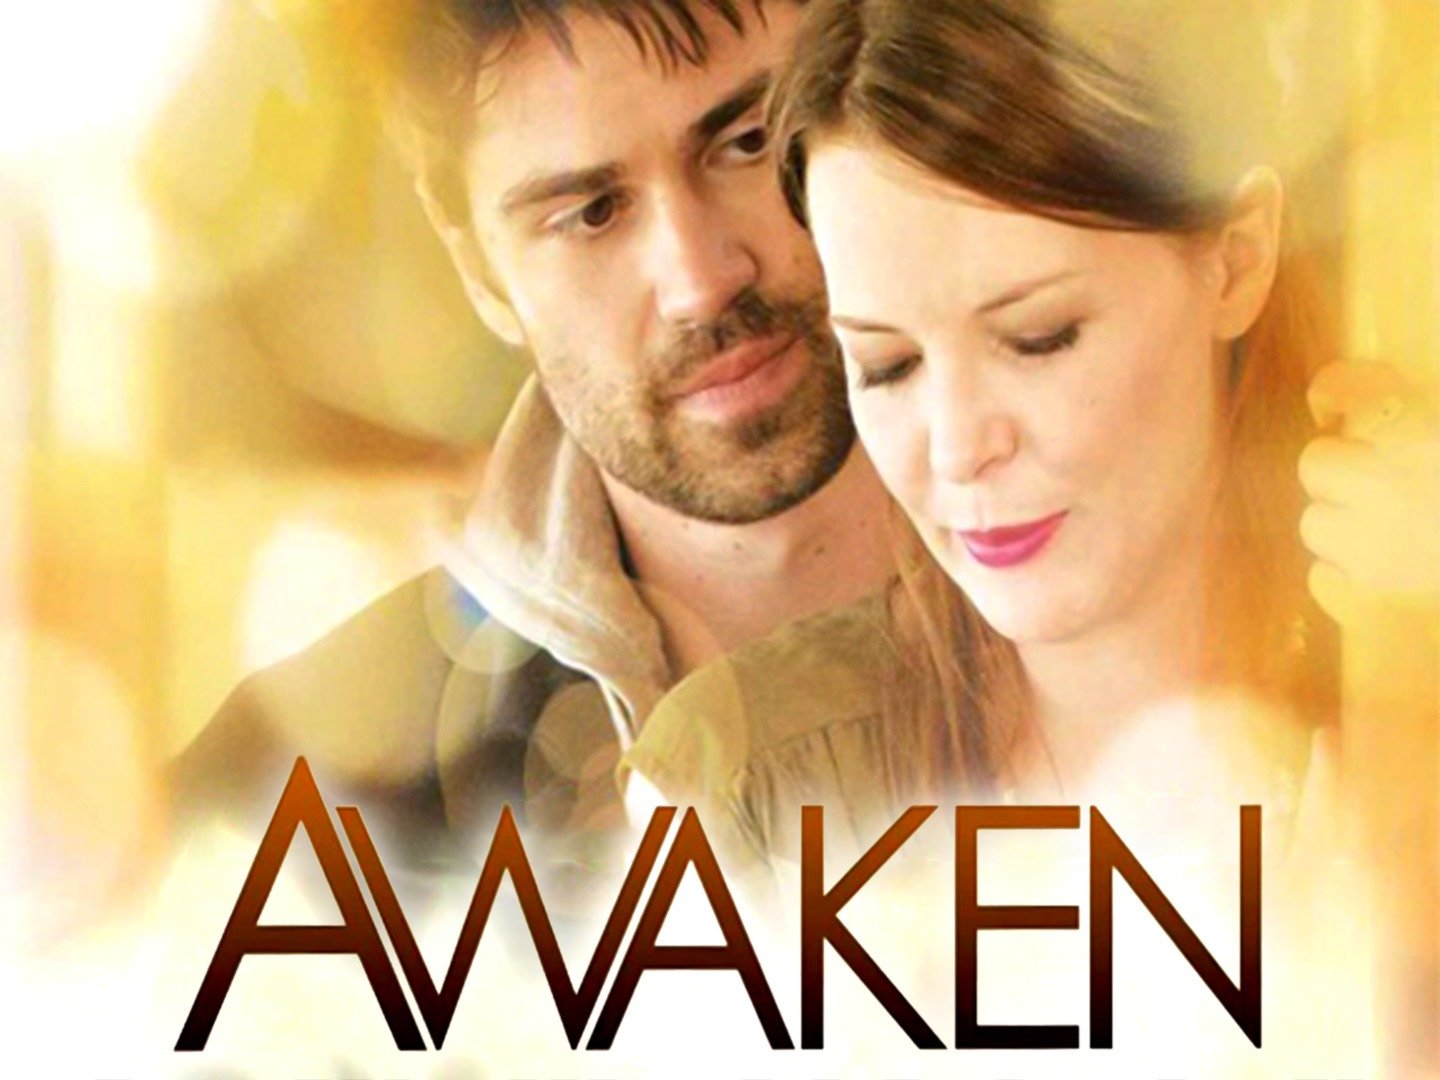 awaken or awoken definition